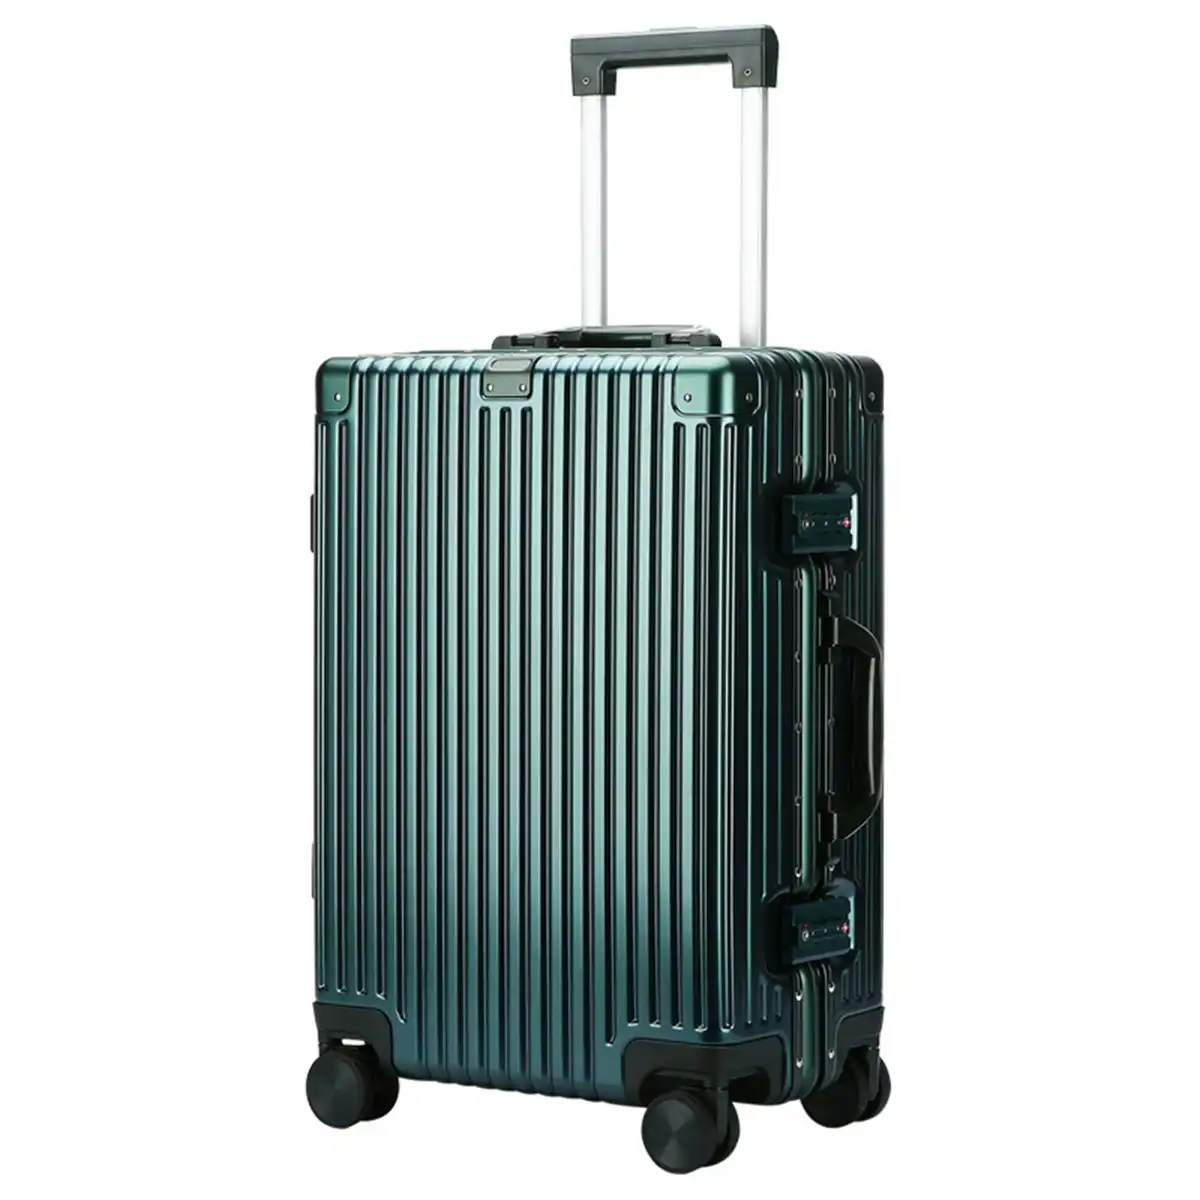 Bopai Aluminium Luggage Suitcase Lightweight TSA Locker 8 Wheels 360 Degree Rolling Carry On Hardcase B3203 Green